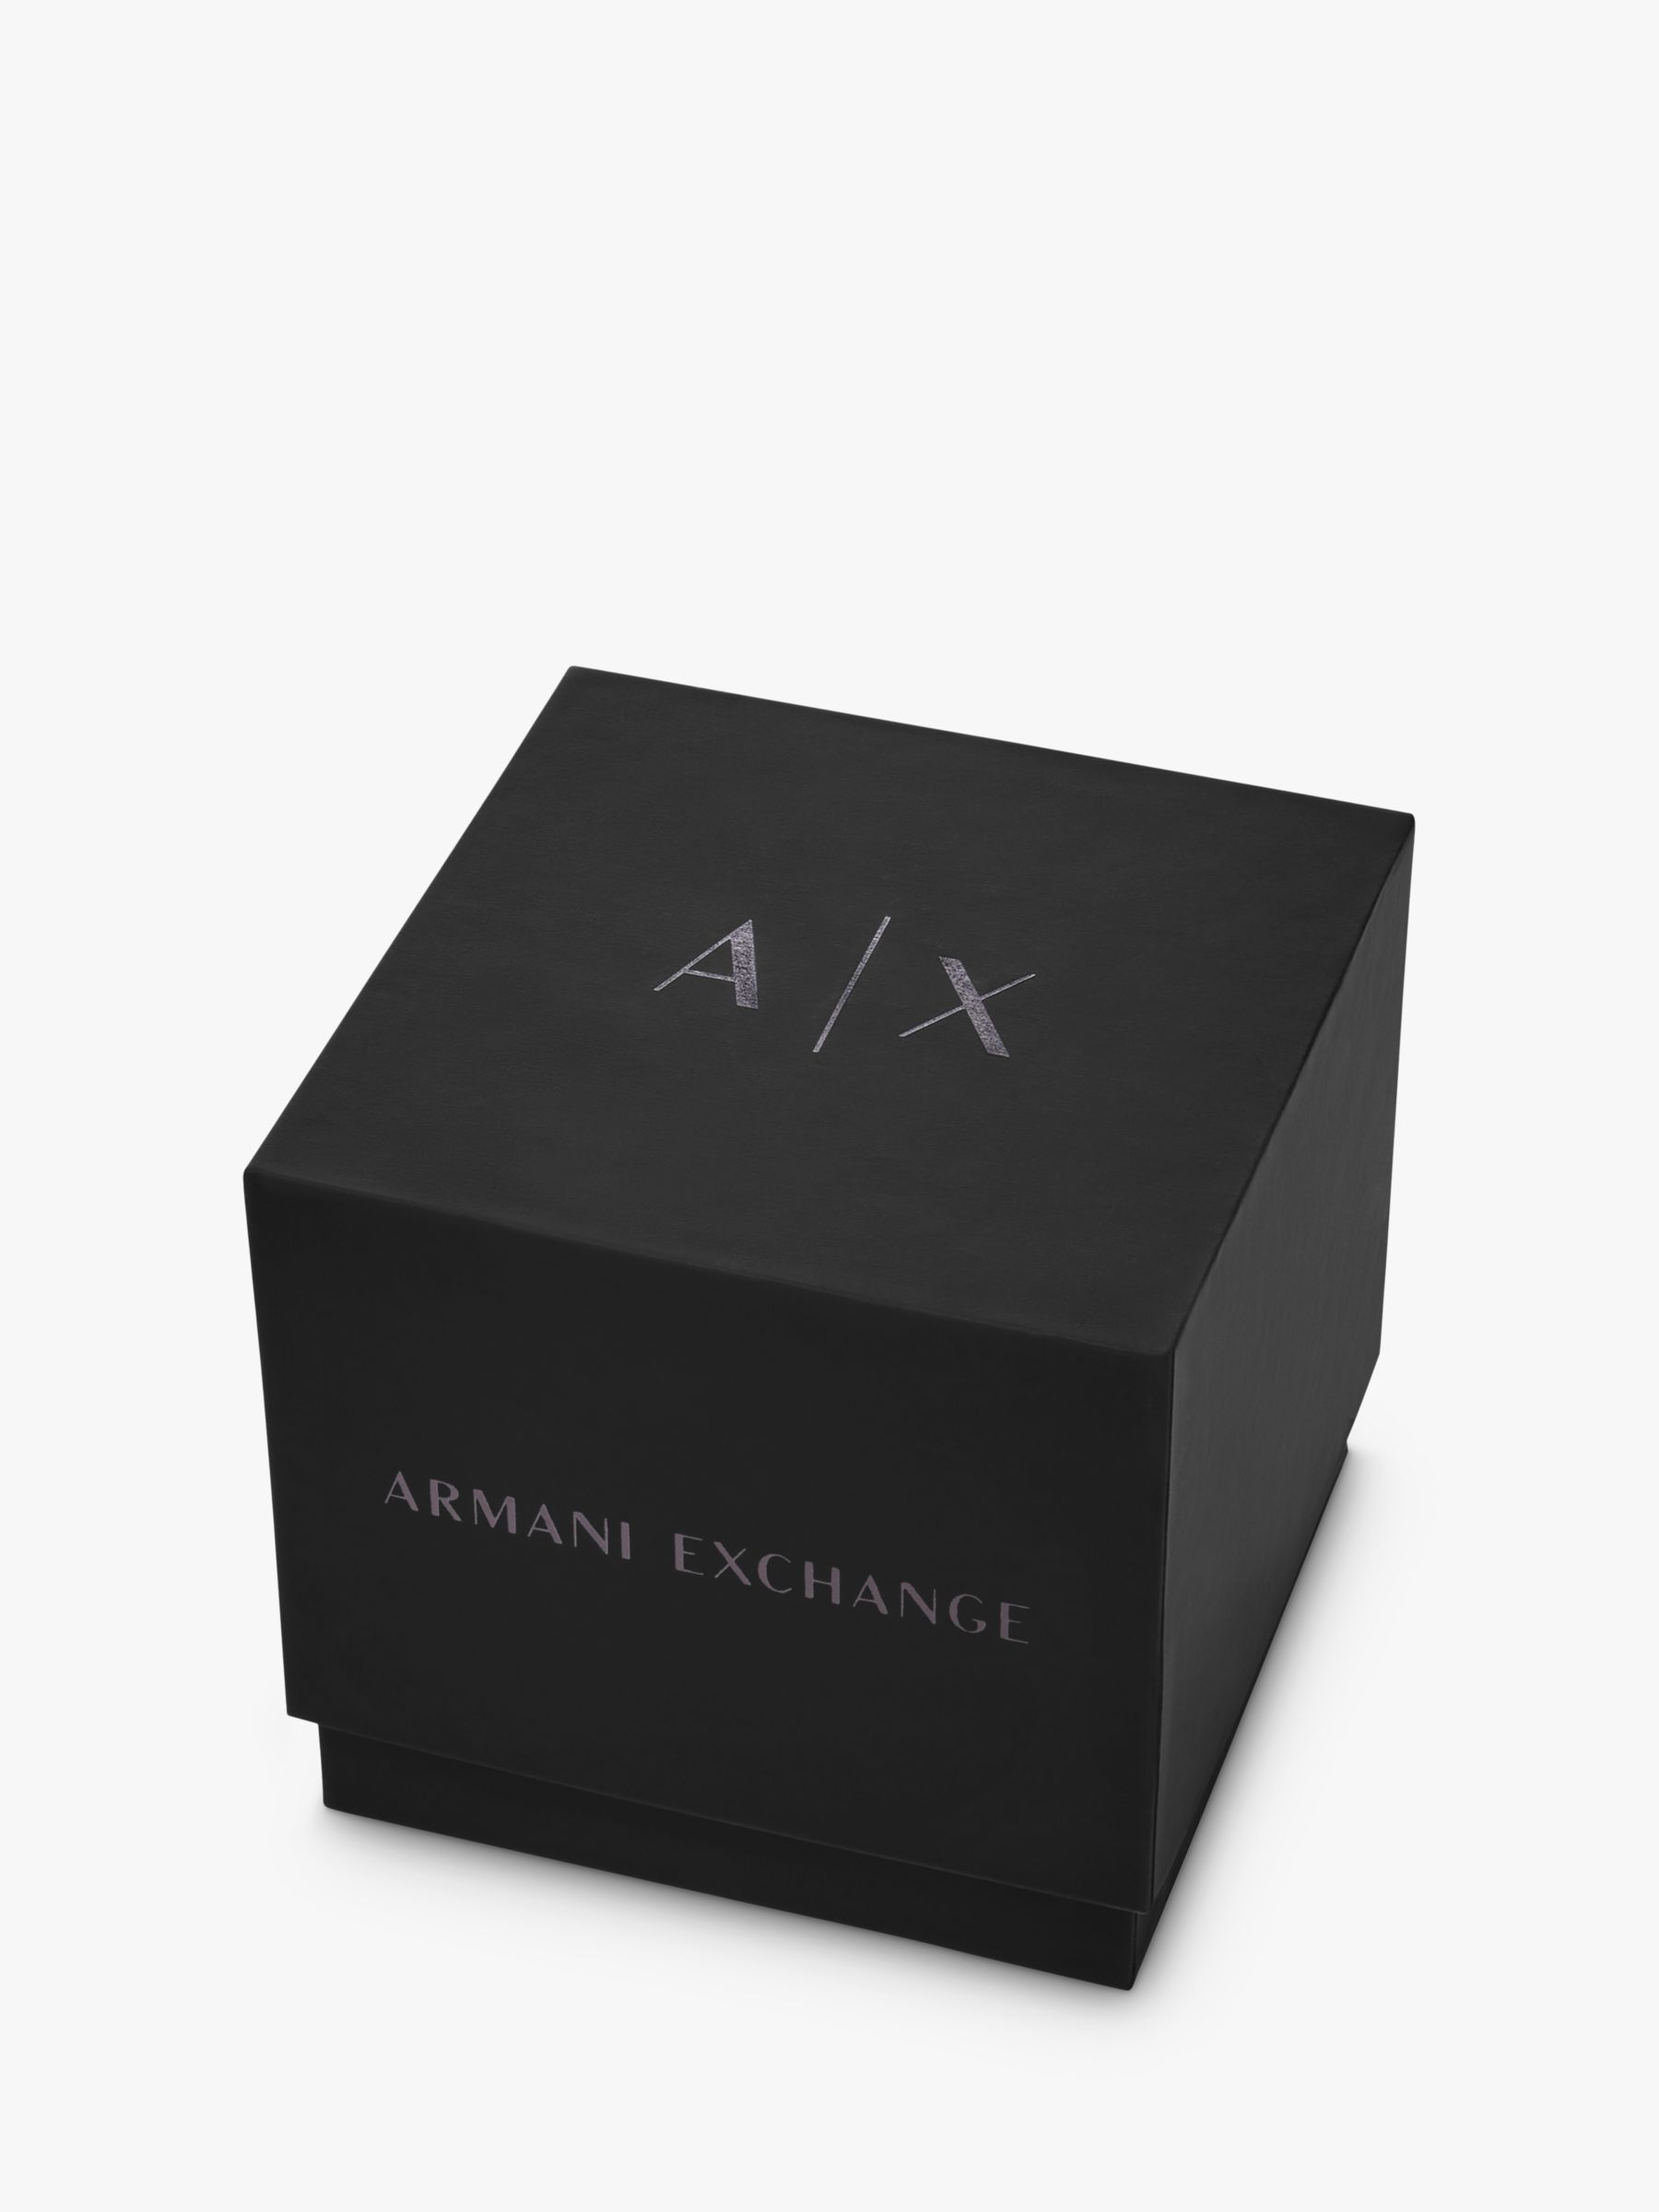 & Armani Partners Black Ceramic John Emporio at Strap Watch, Chronograph Lewis Men\'s